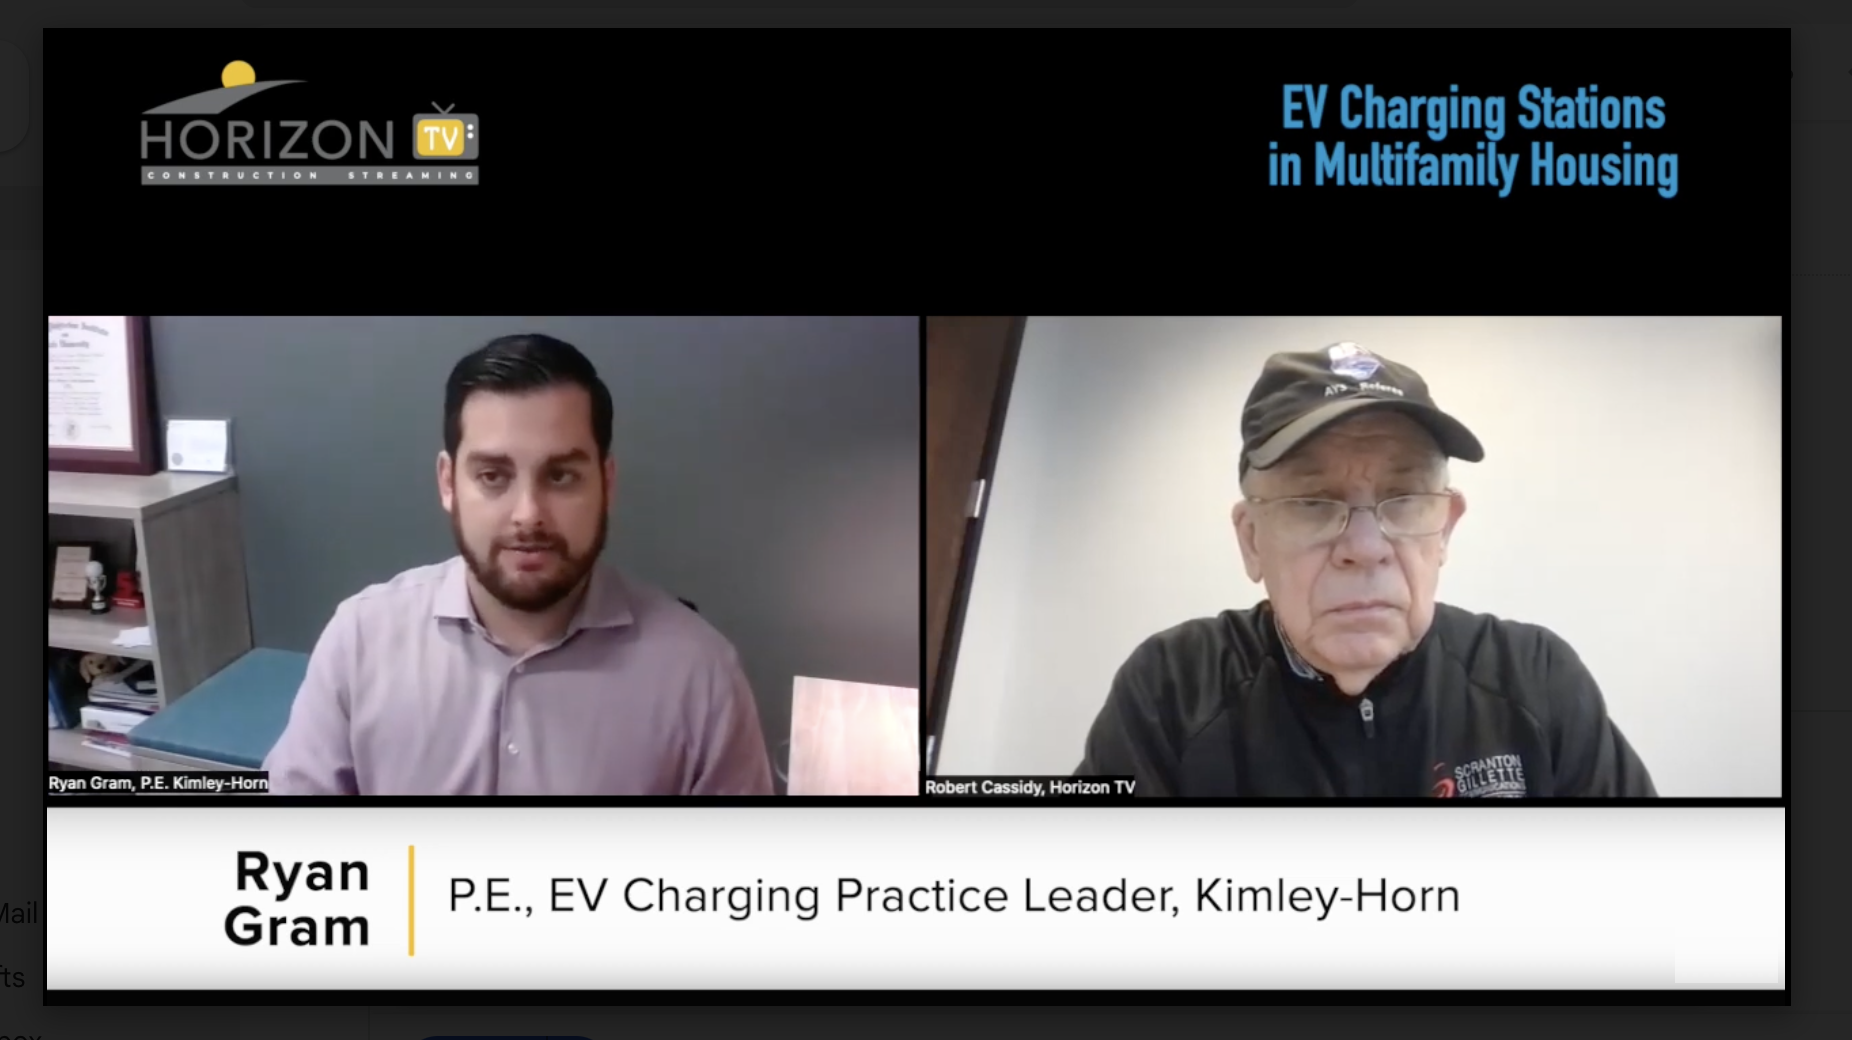 EV Charging Stations in Multifamily Housing, Ryan Gram, PE, EV Charging Practice Leader, Kimley-Horn